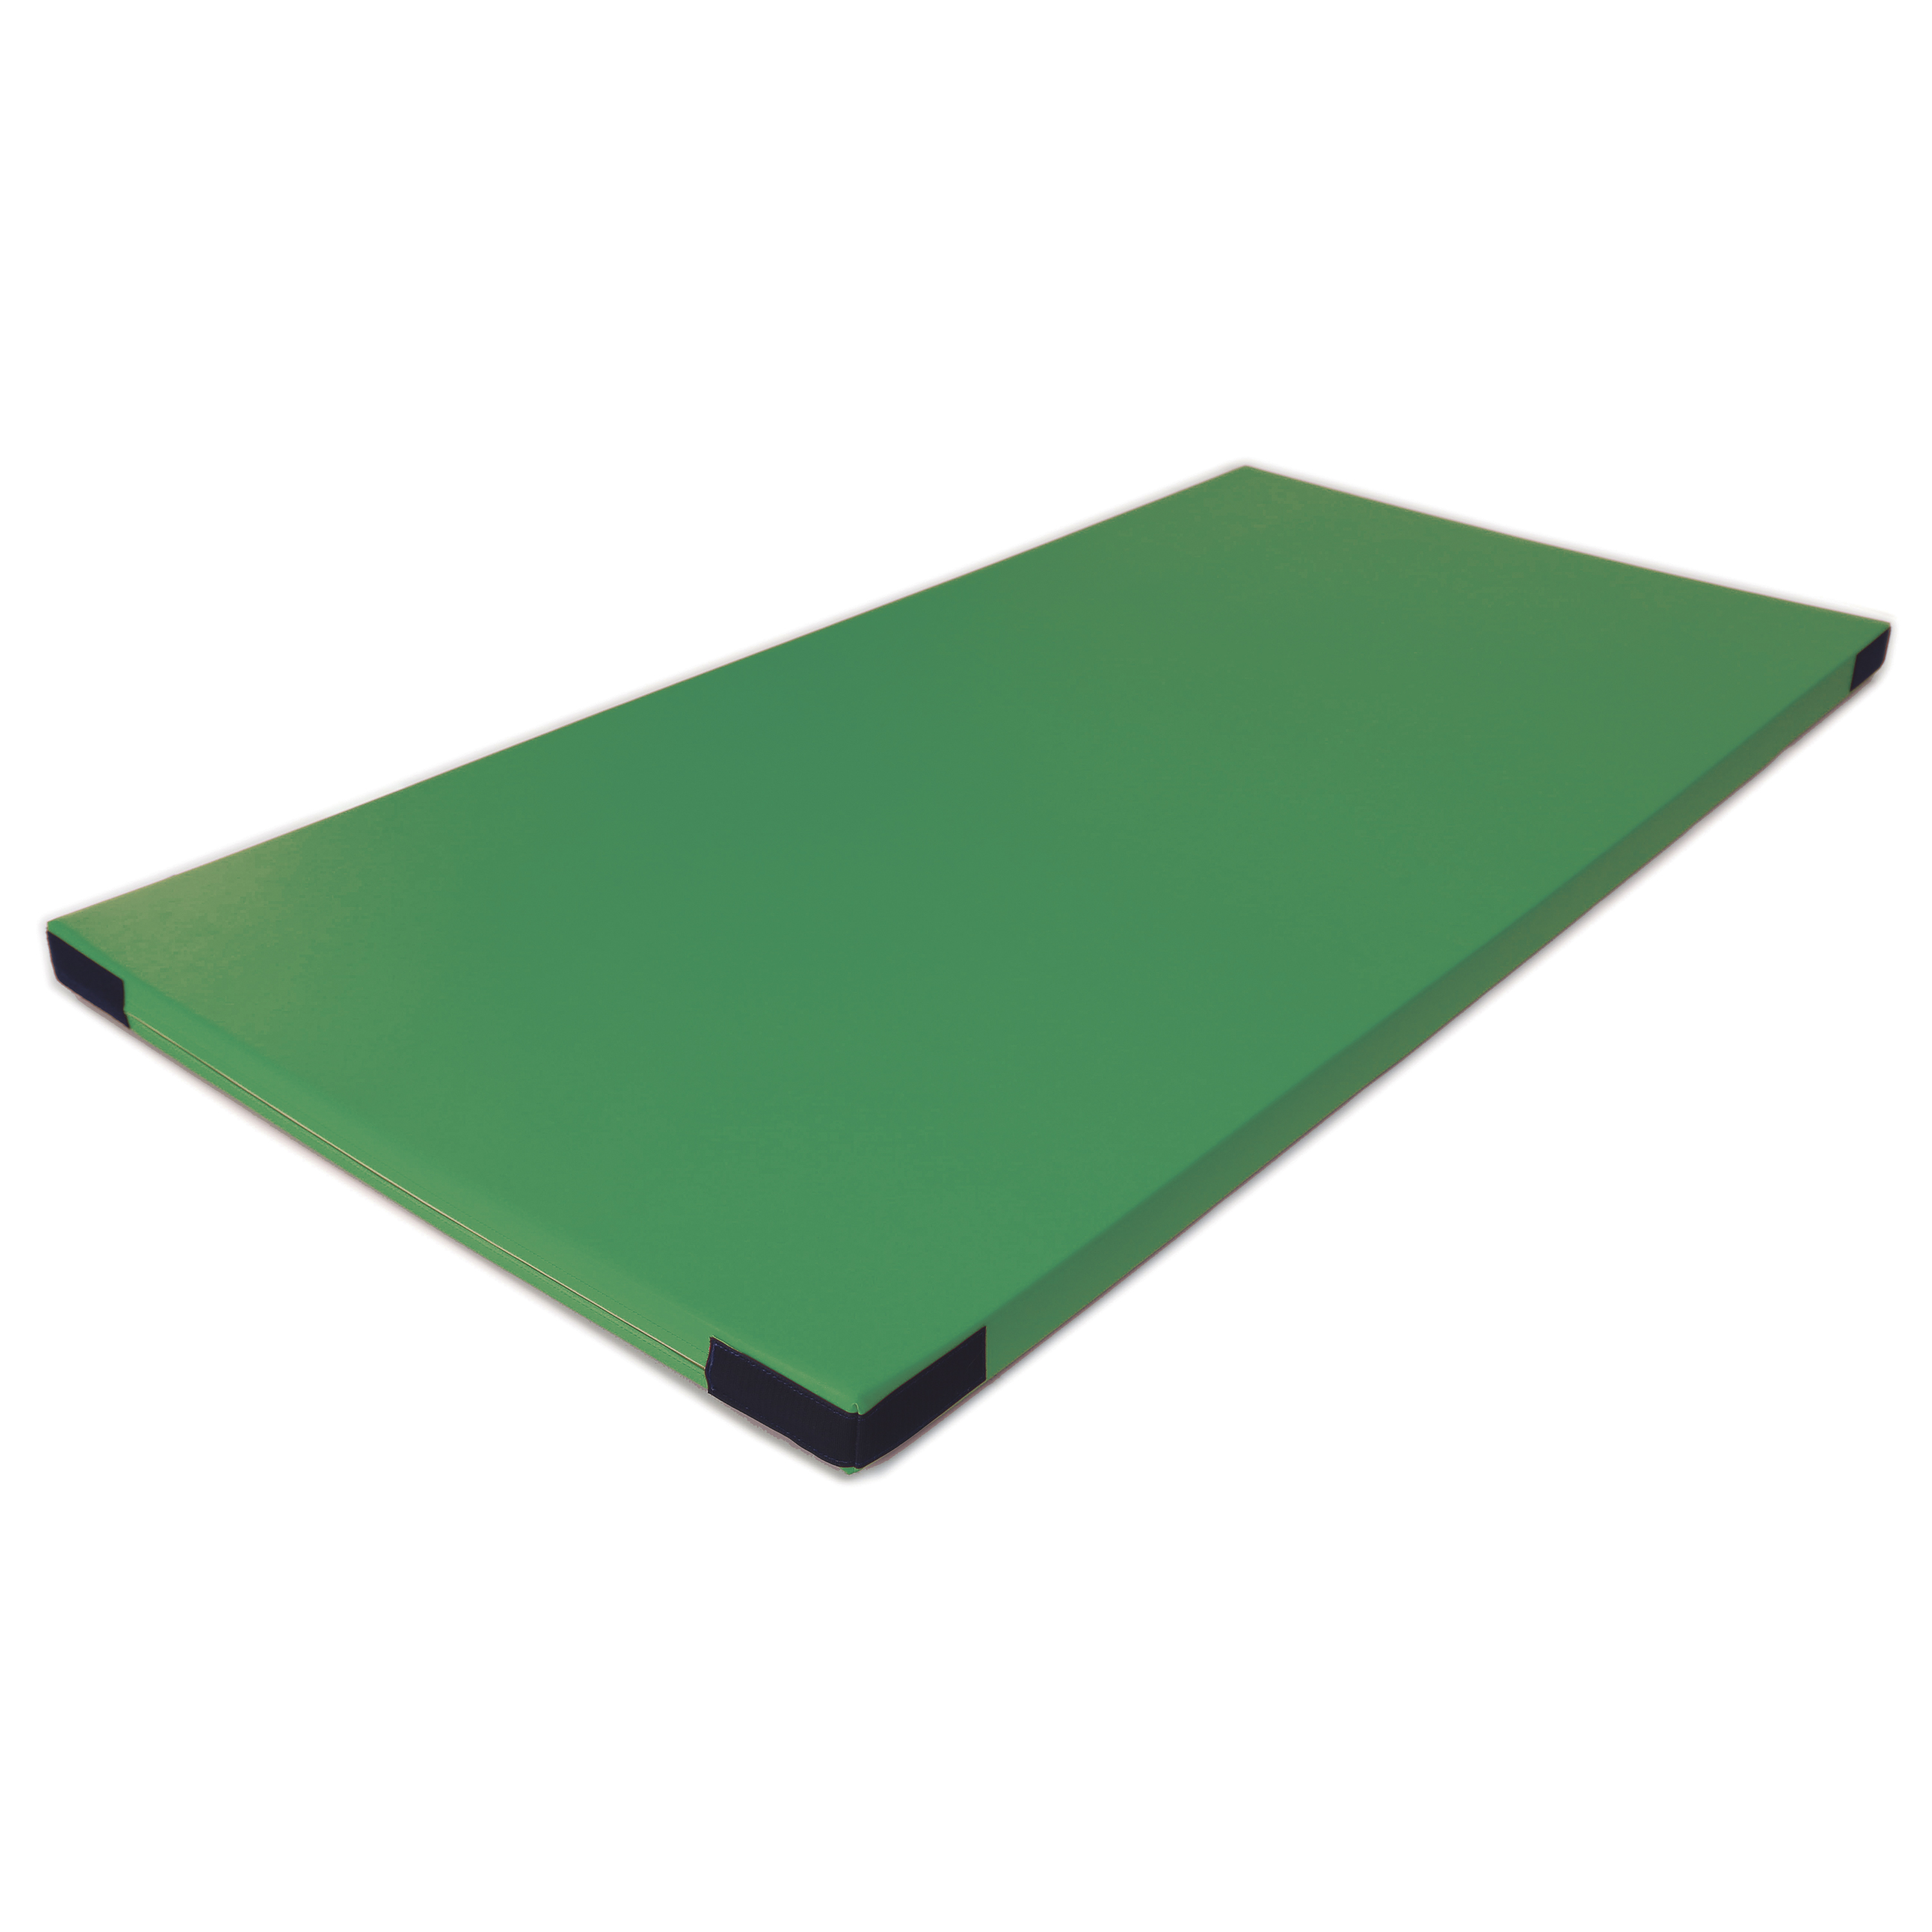 Fallschutzmatte Superleicht 'grün' Klett, 150 x 100 cm